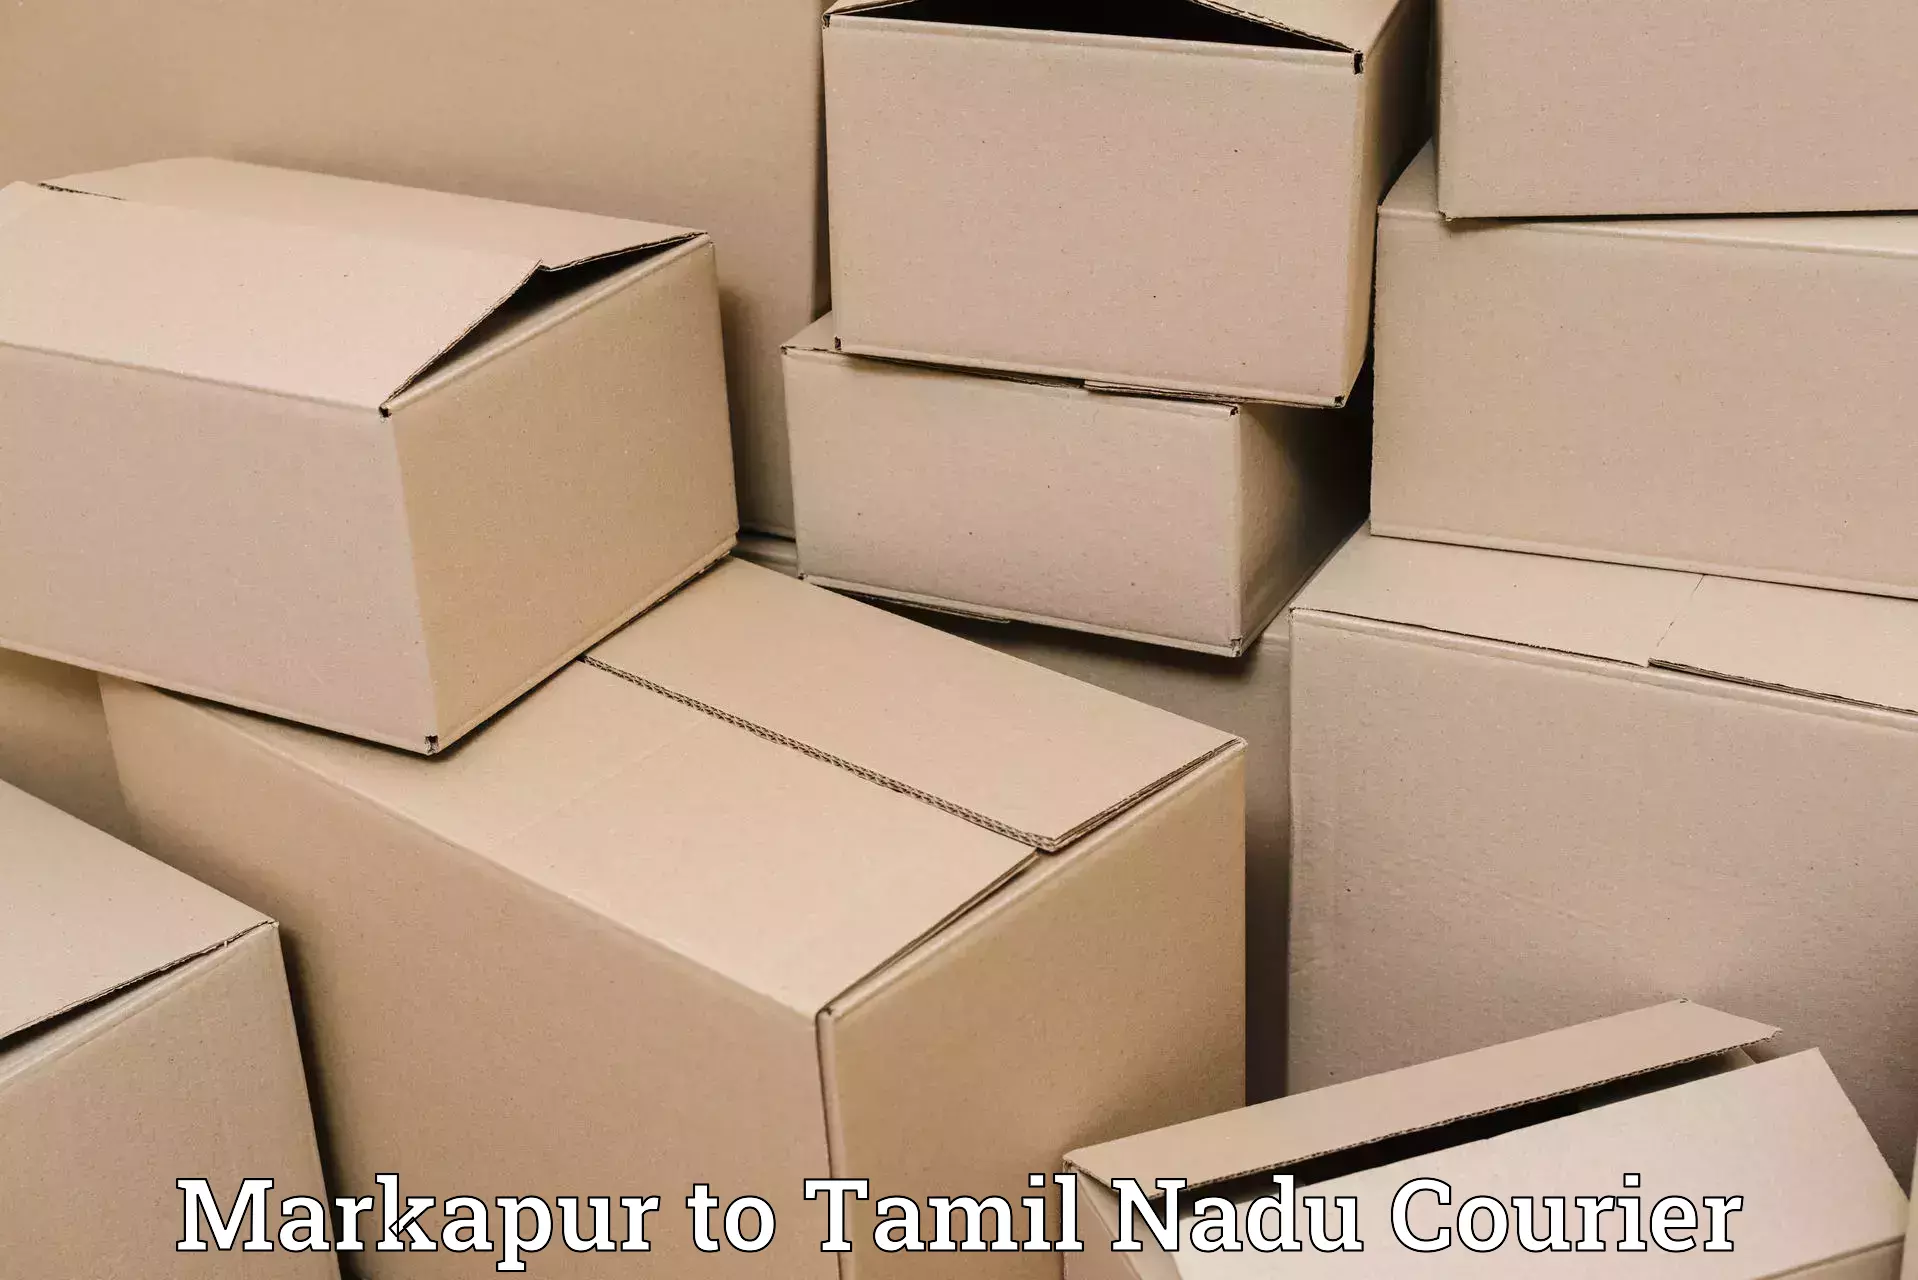 Courier service partnerships Markapur to Salem